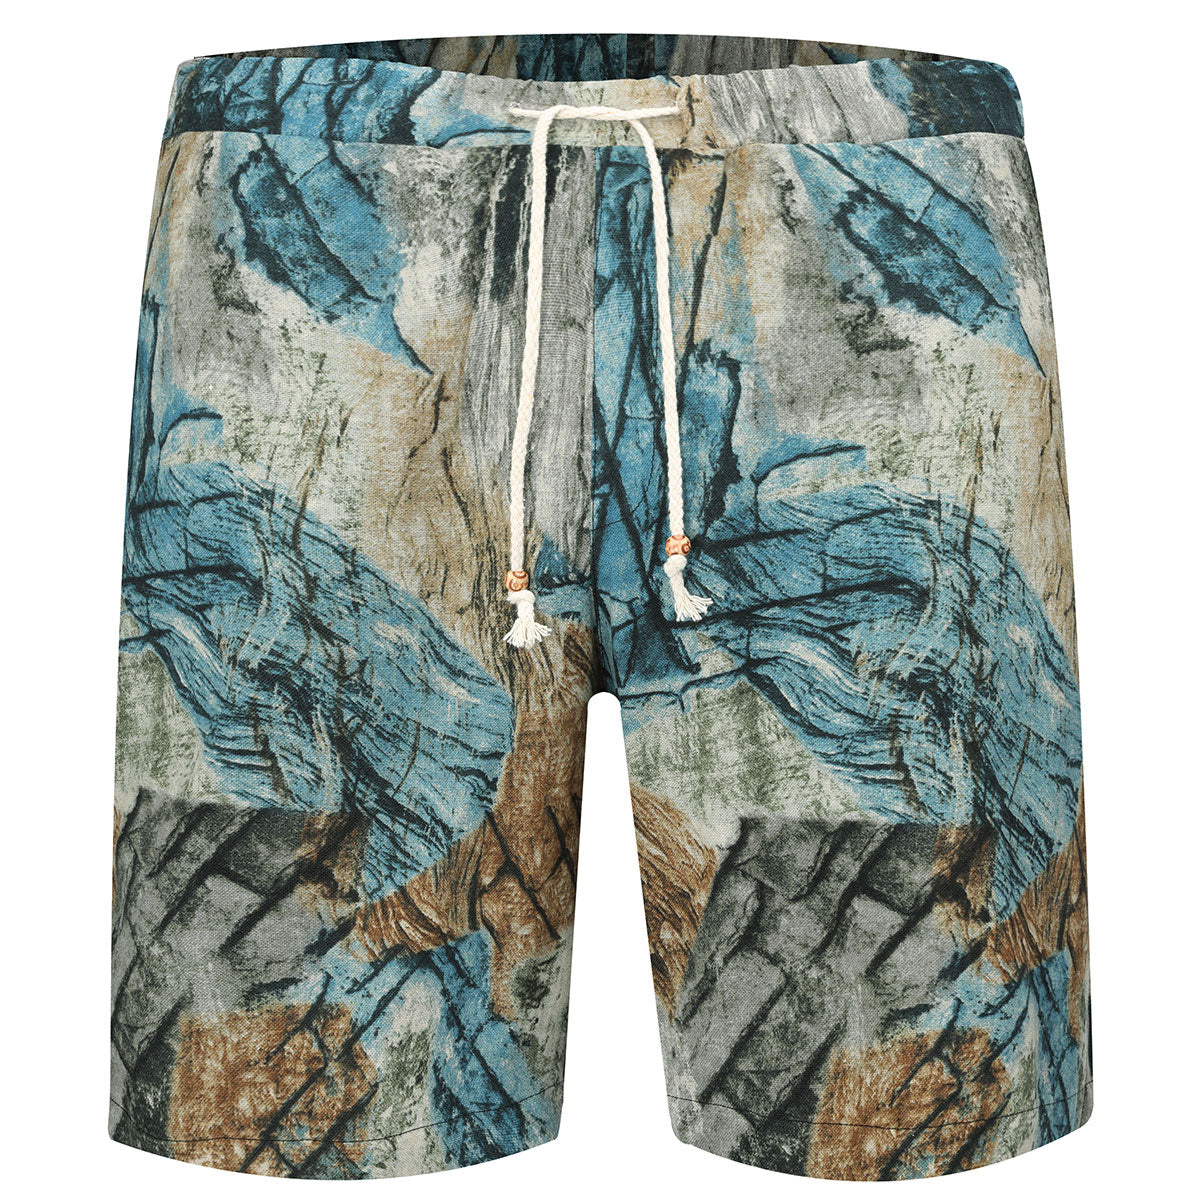 Trendy 2-Piece Color Printed Hawaii Summer Suit